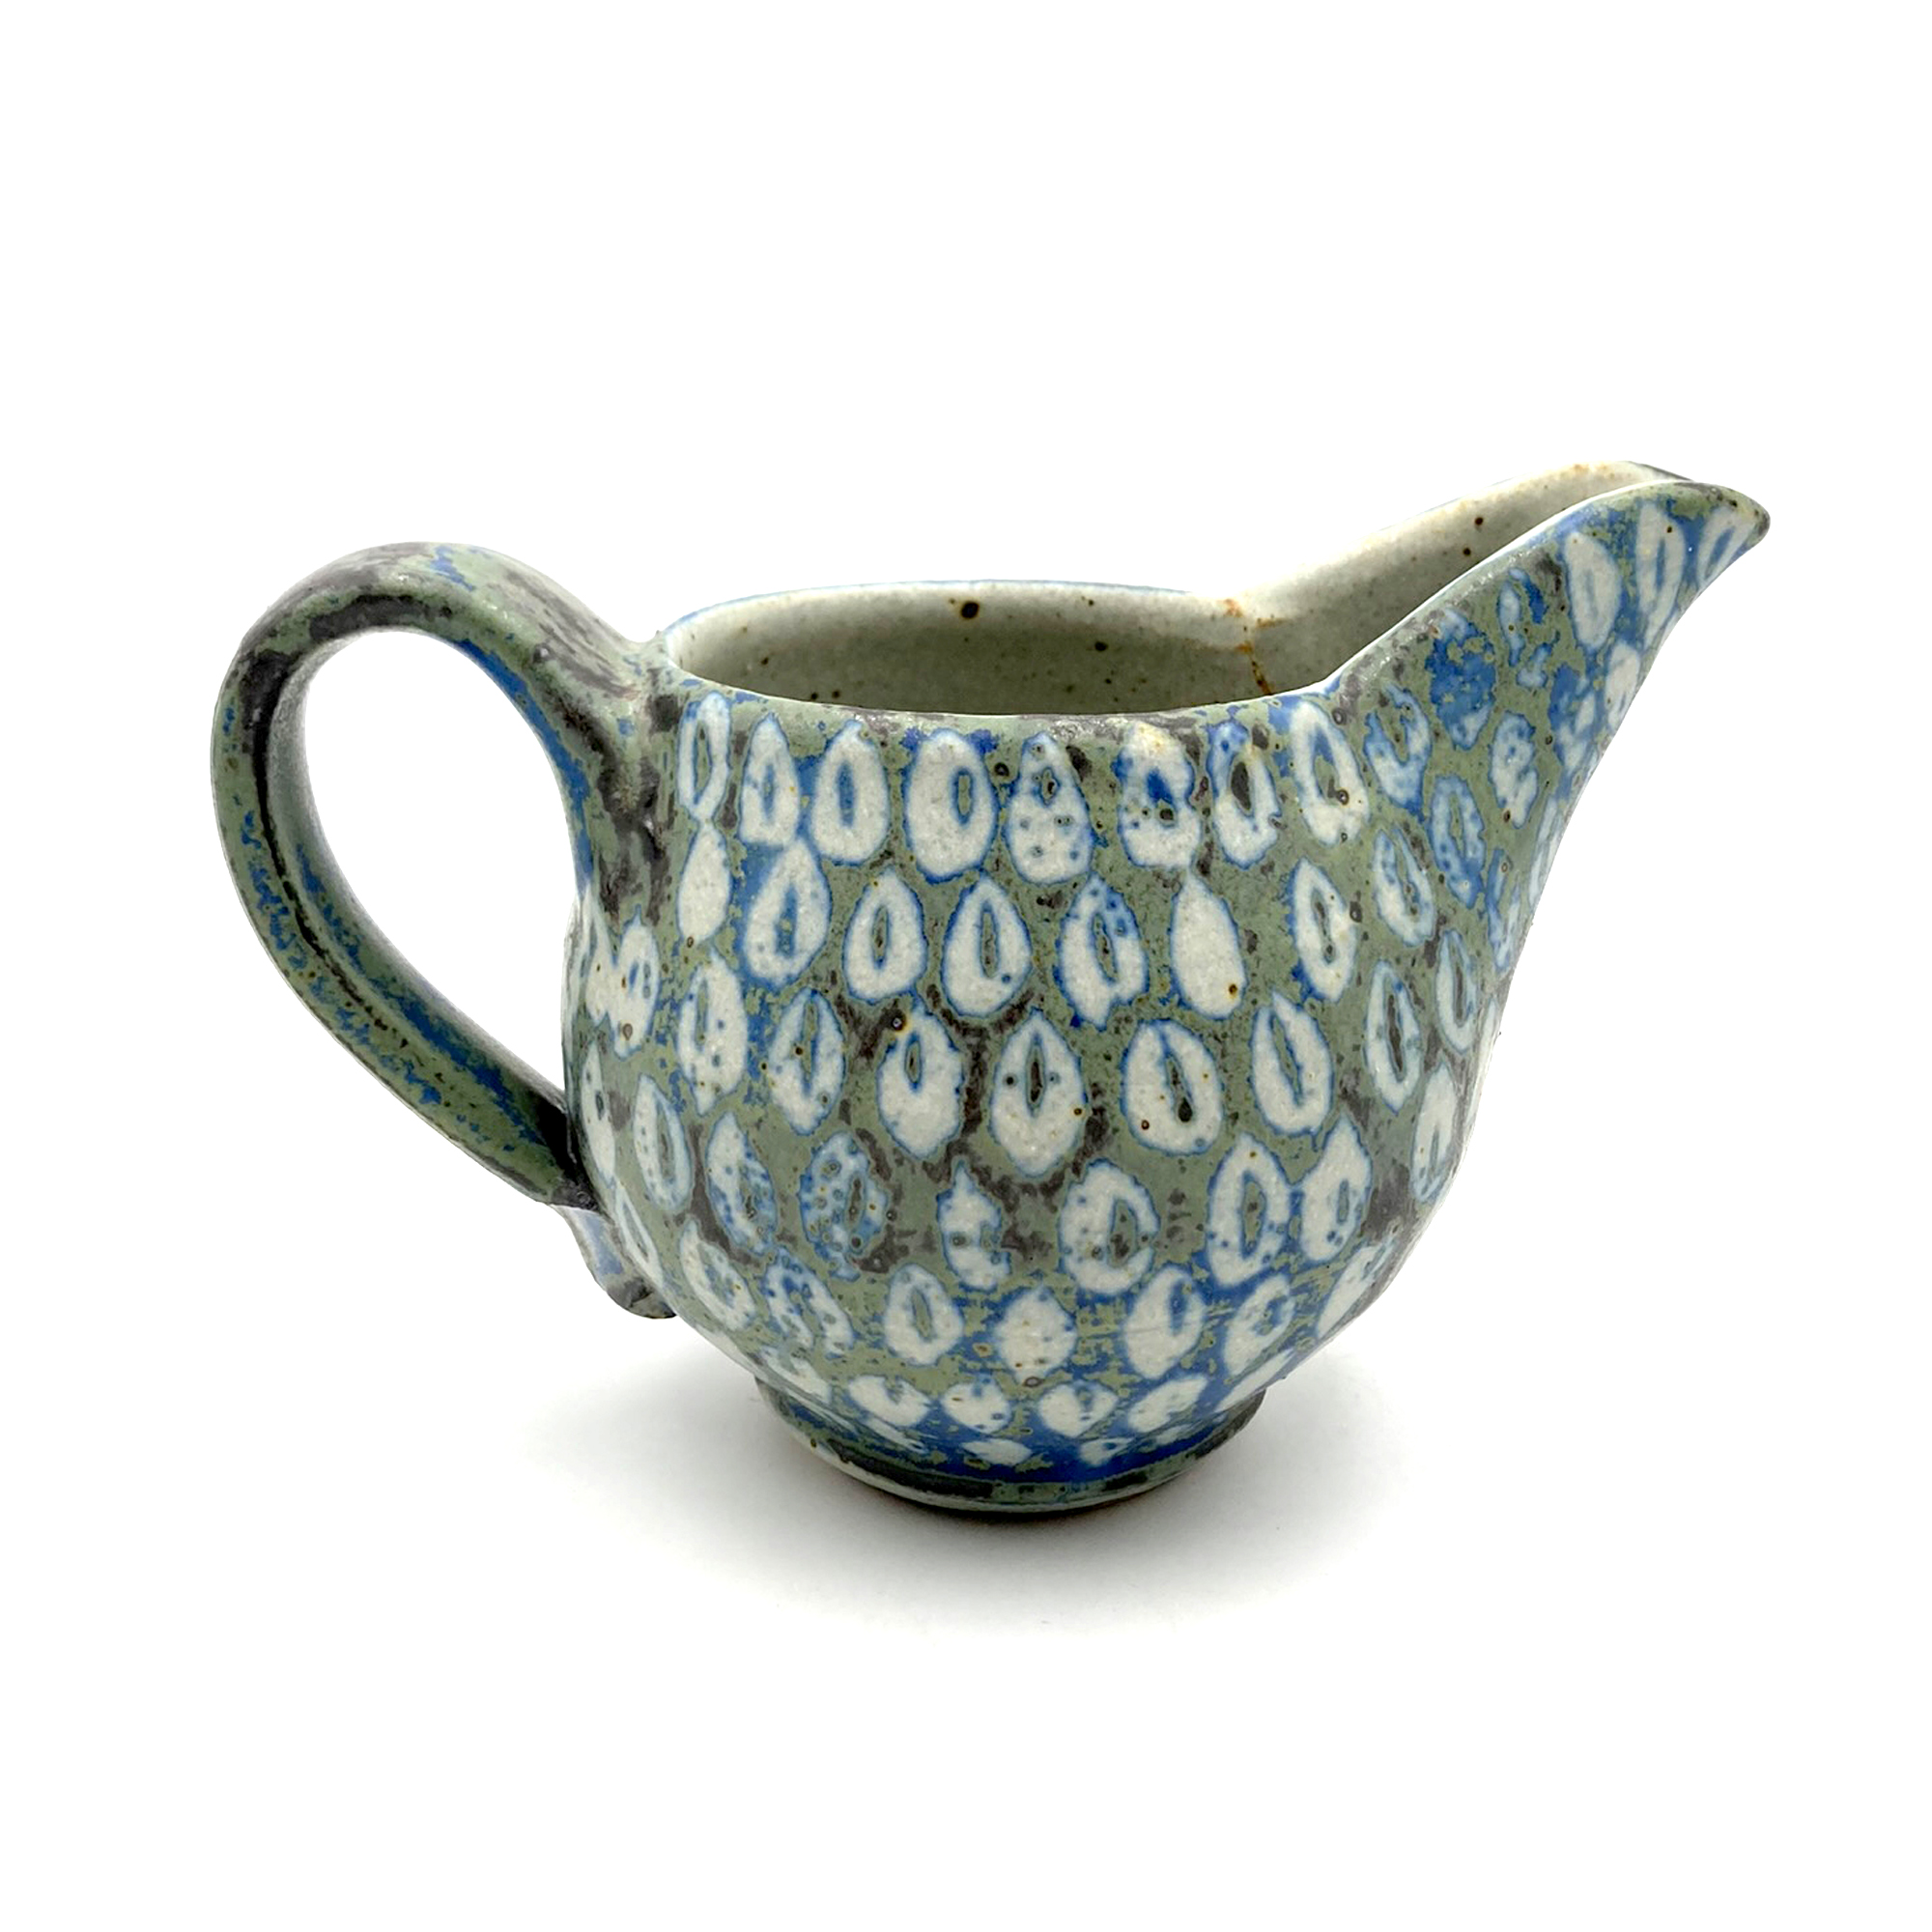 Ceramic pitcher by Alana Cuellar